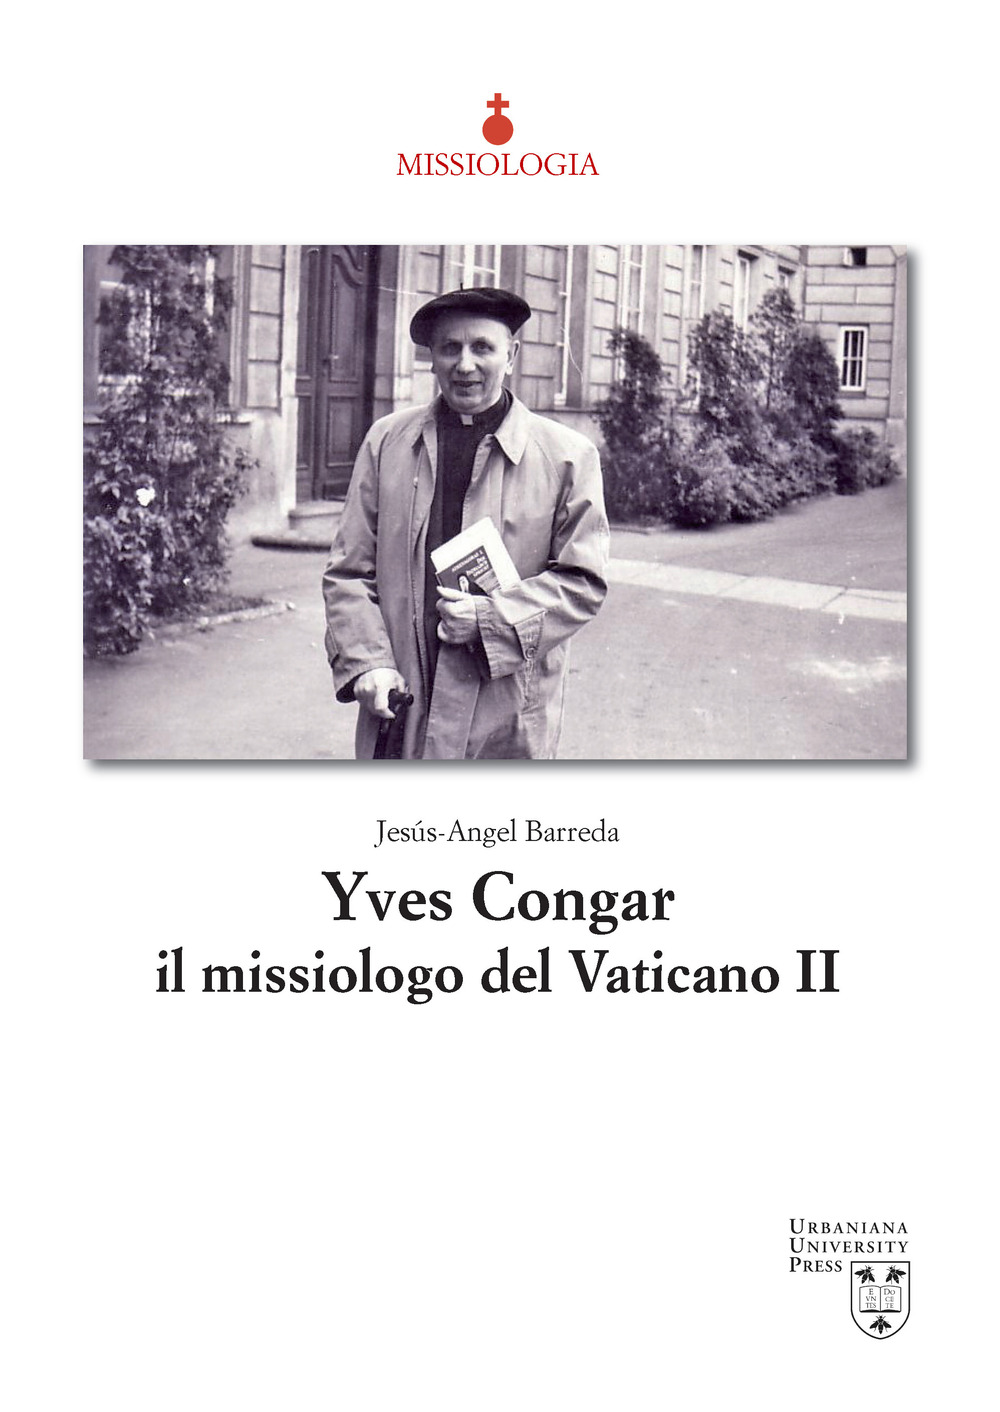 Yves Congar il missiologo del Vaticano II